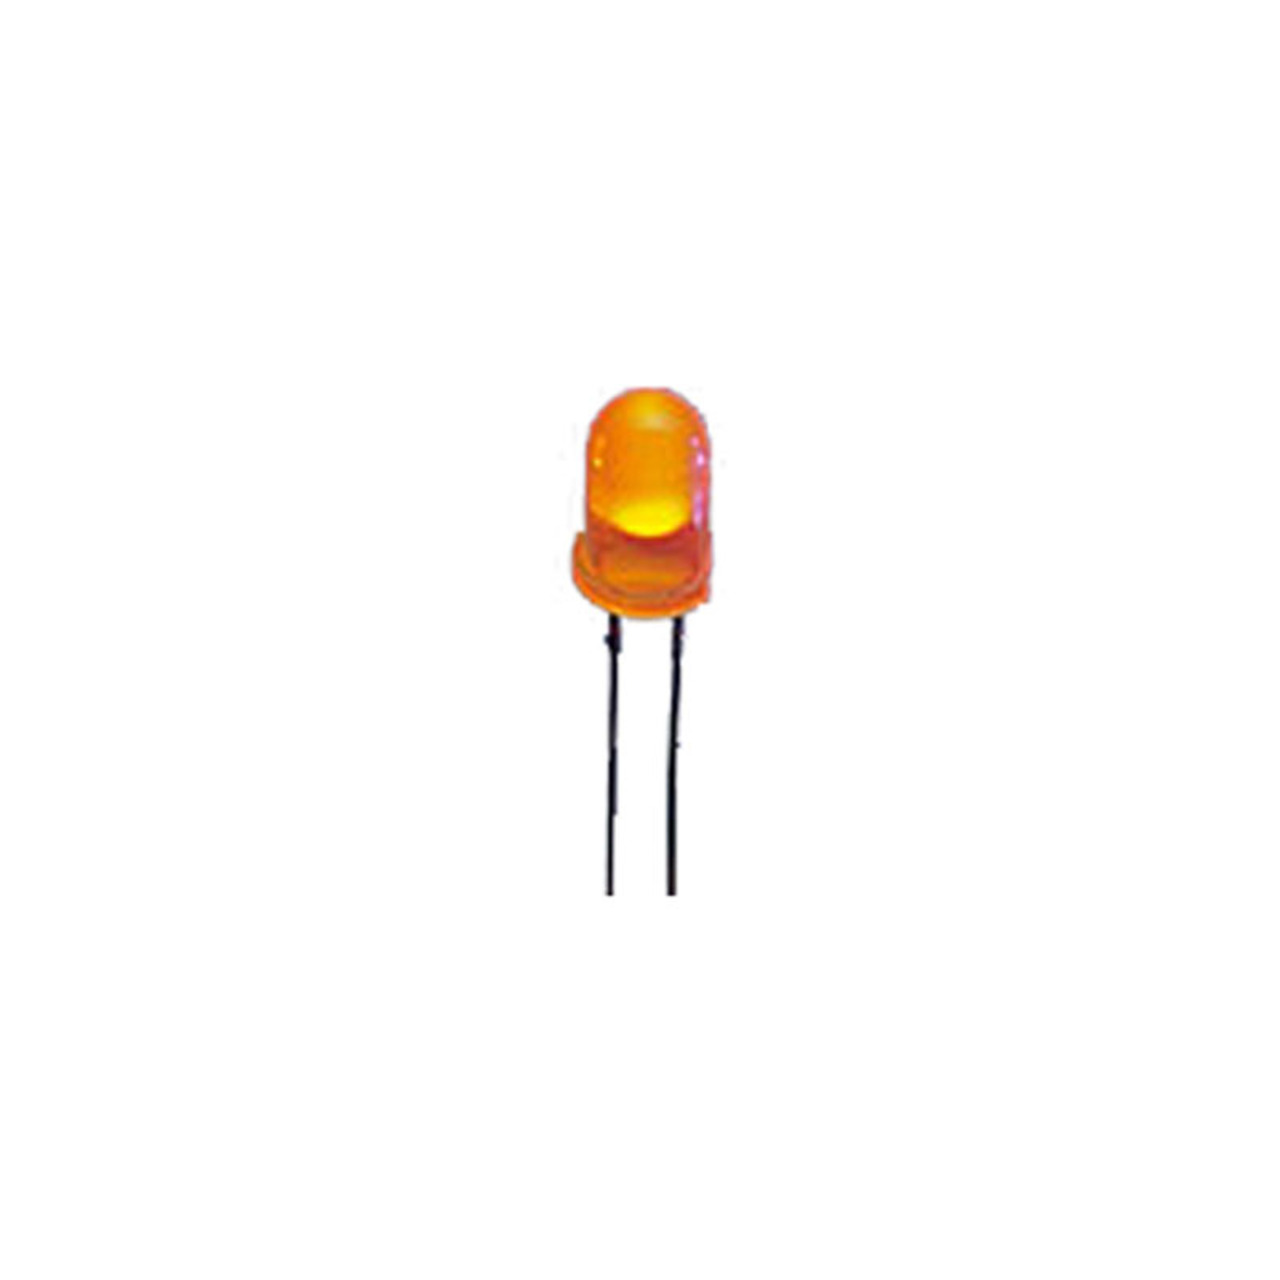 Superhelle 5 mm LED- Orange- 2-500 mcd- 10er-Pack unter Komponenten